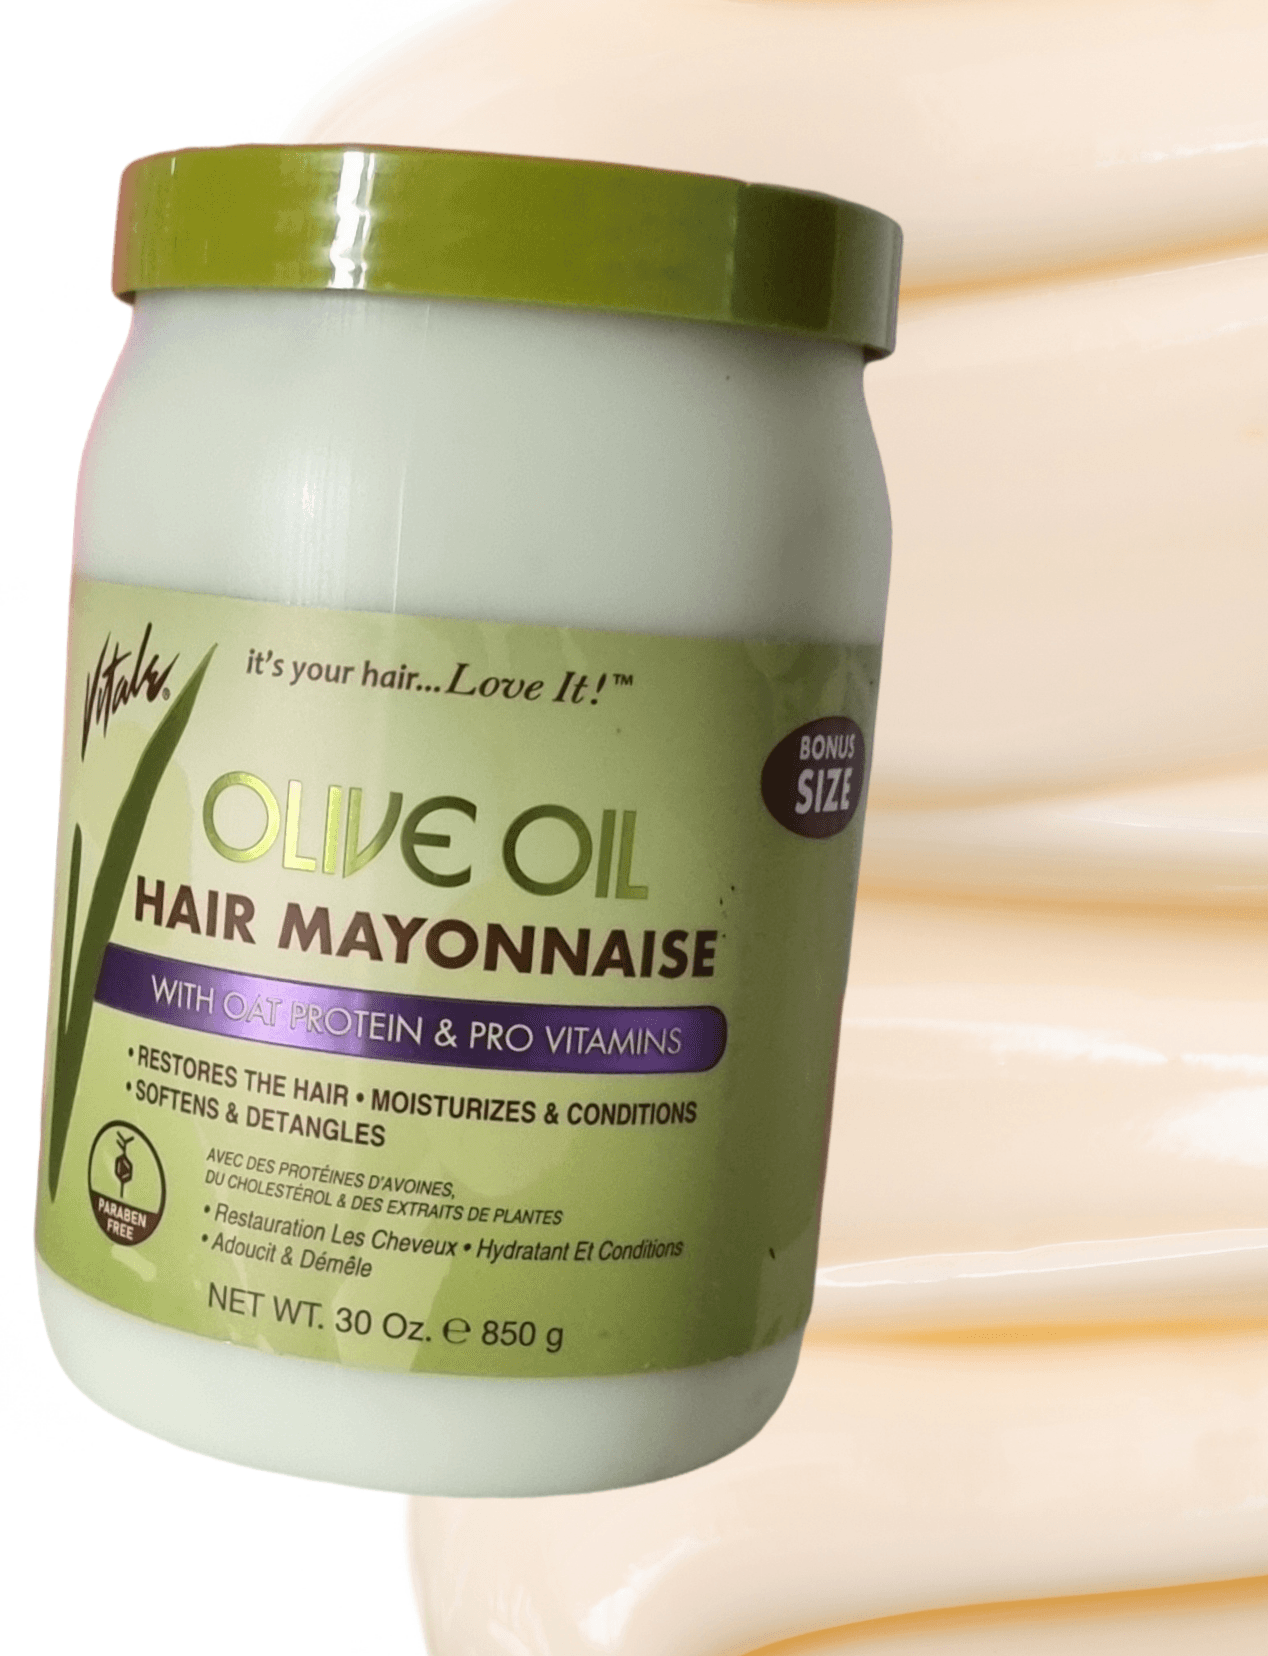 Vitale Pro Olive Oil-Based Hair Mayonnaise – LocsNco